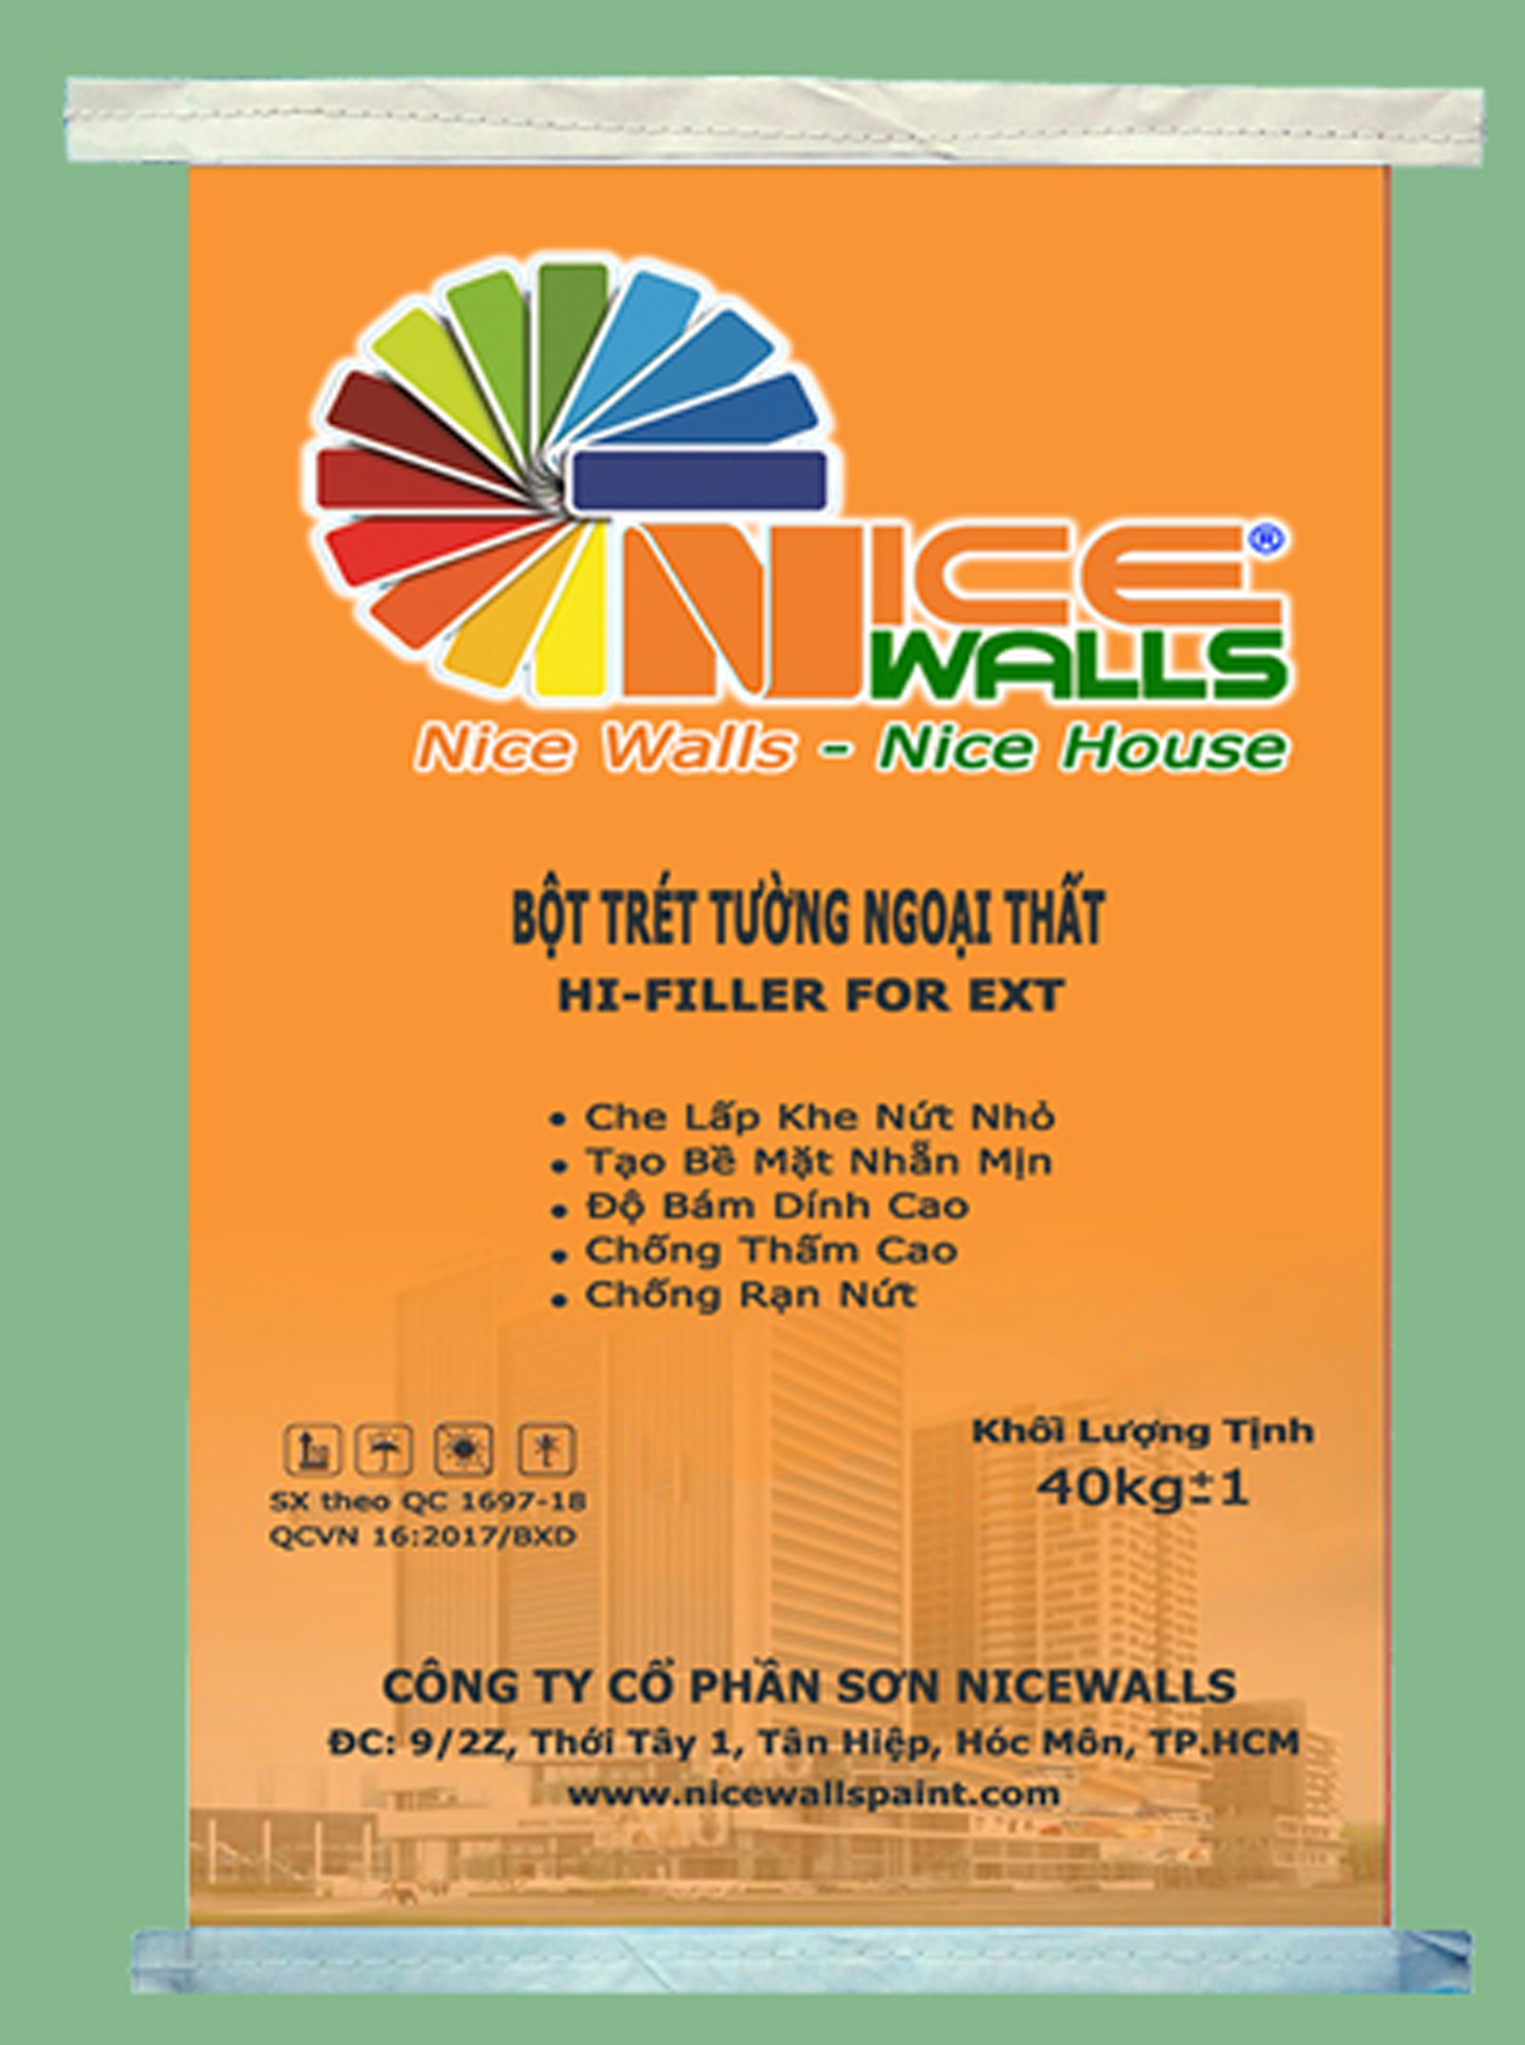 NICEWALLS HI-FILER FOR EXT